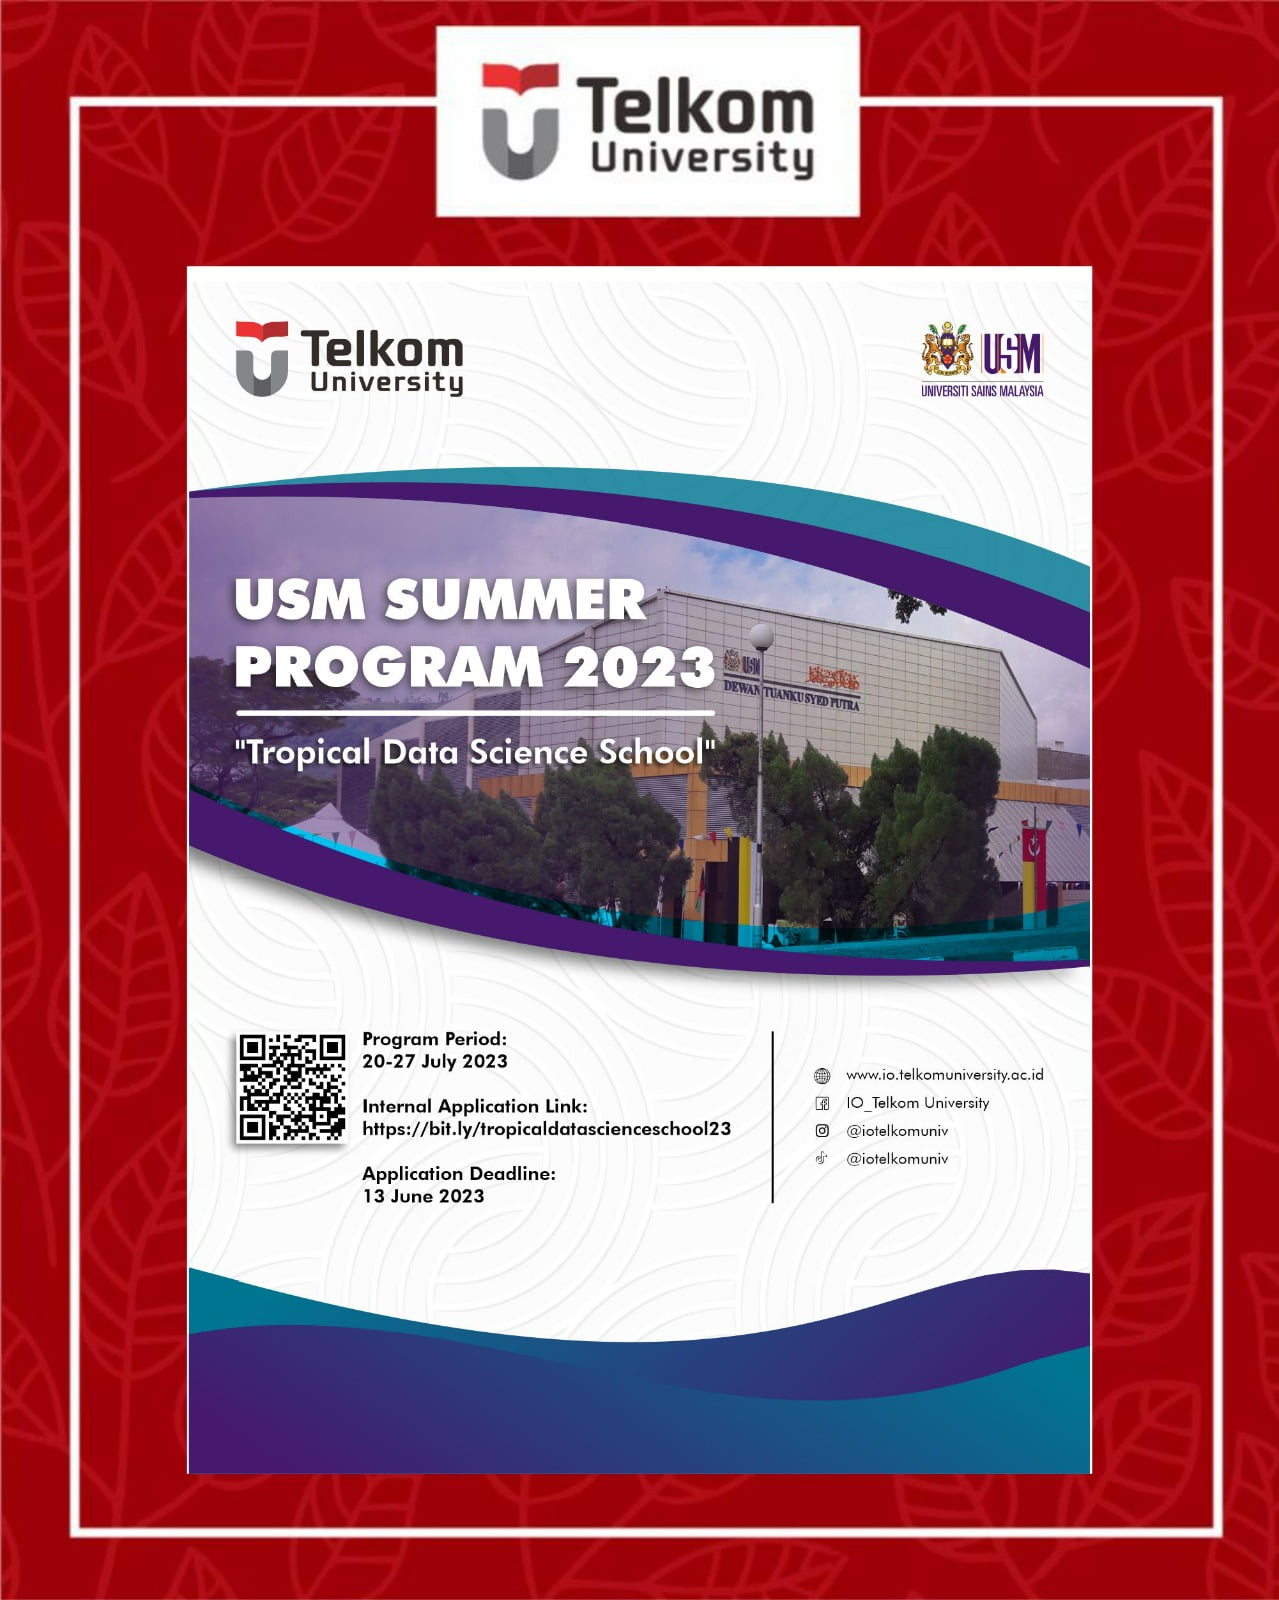 USM Summer Program 2023 is a short course offered by USM